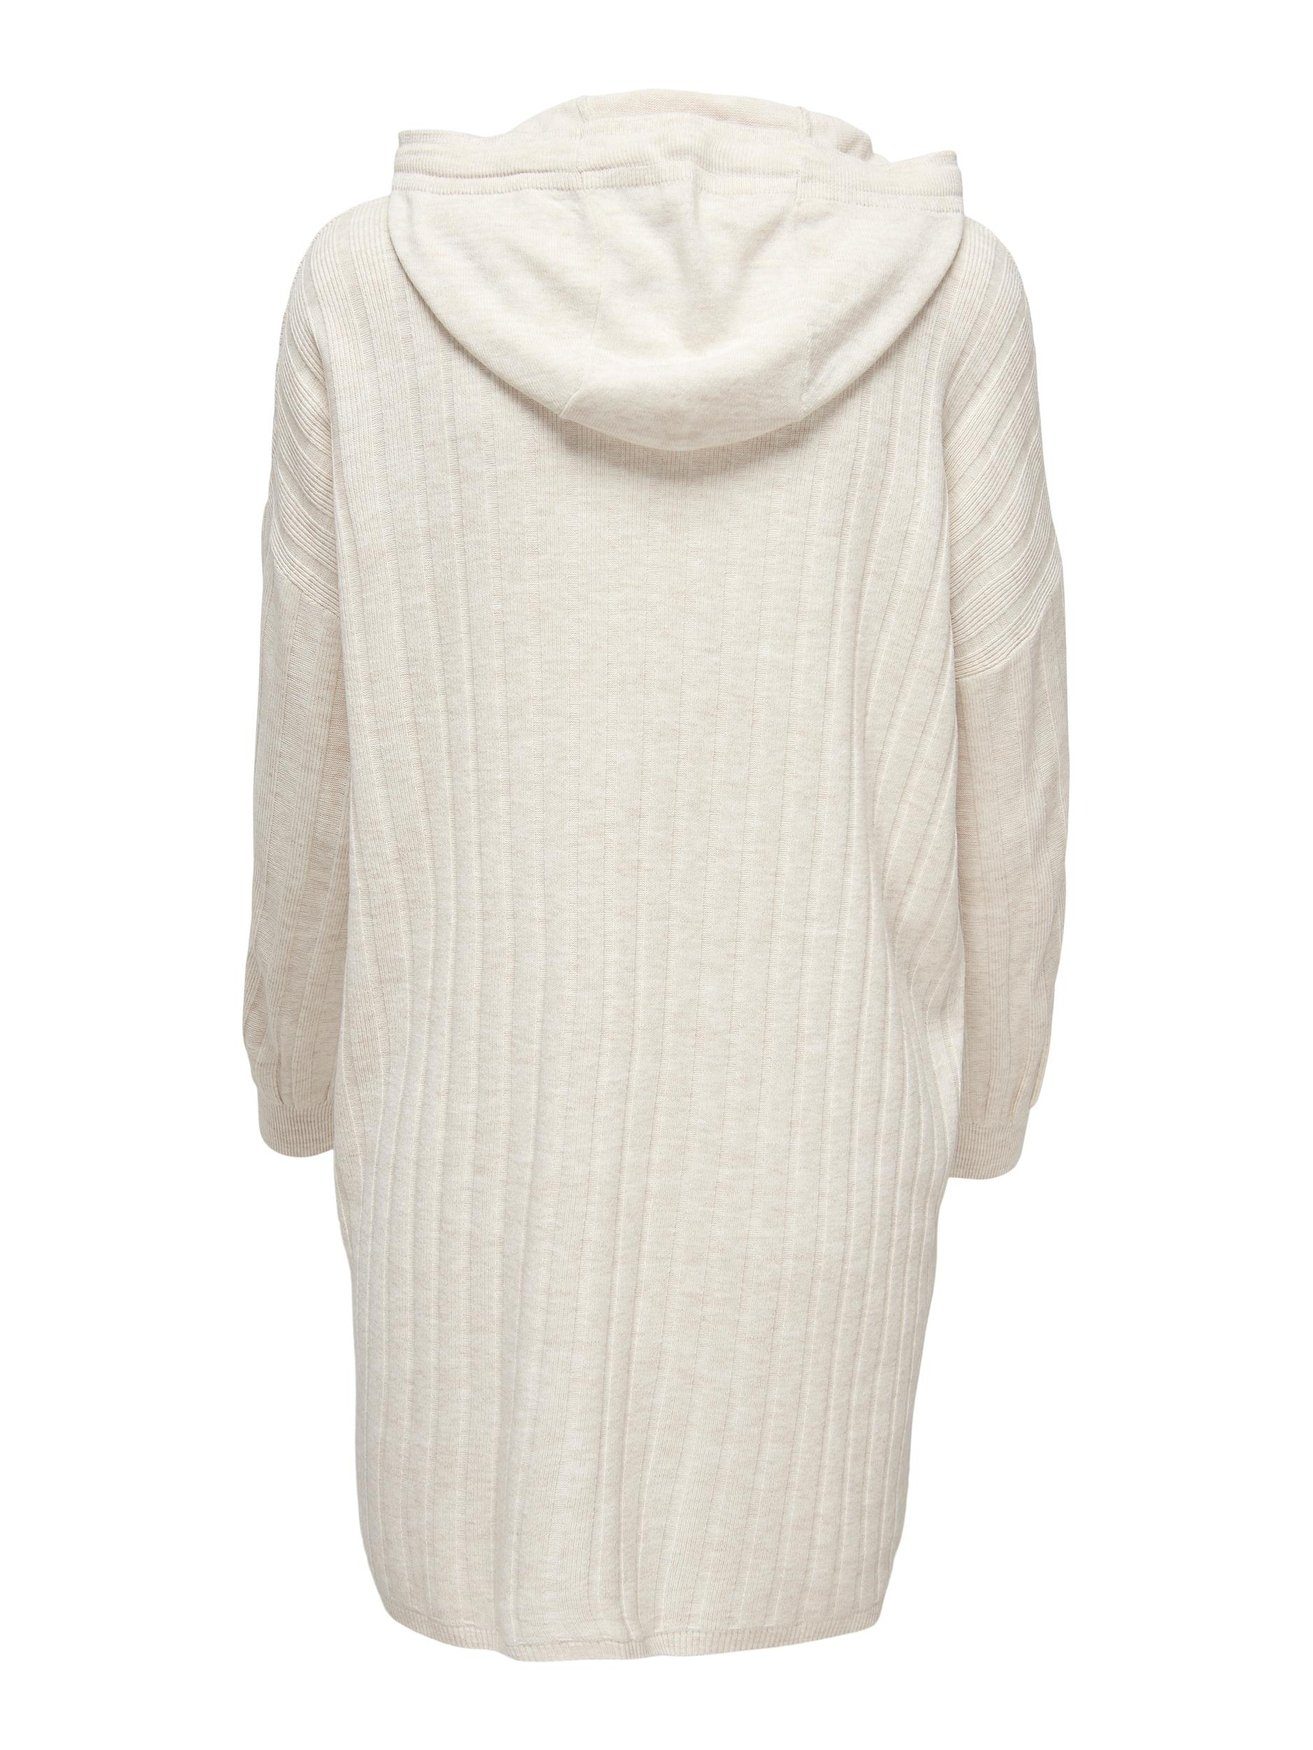 (20) Mini Shirtkleid 6157 ONLTESSA (lang) in ONLY Hoodie Beige Dress offwhite Pullover Strick Kleid